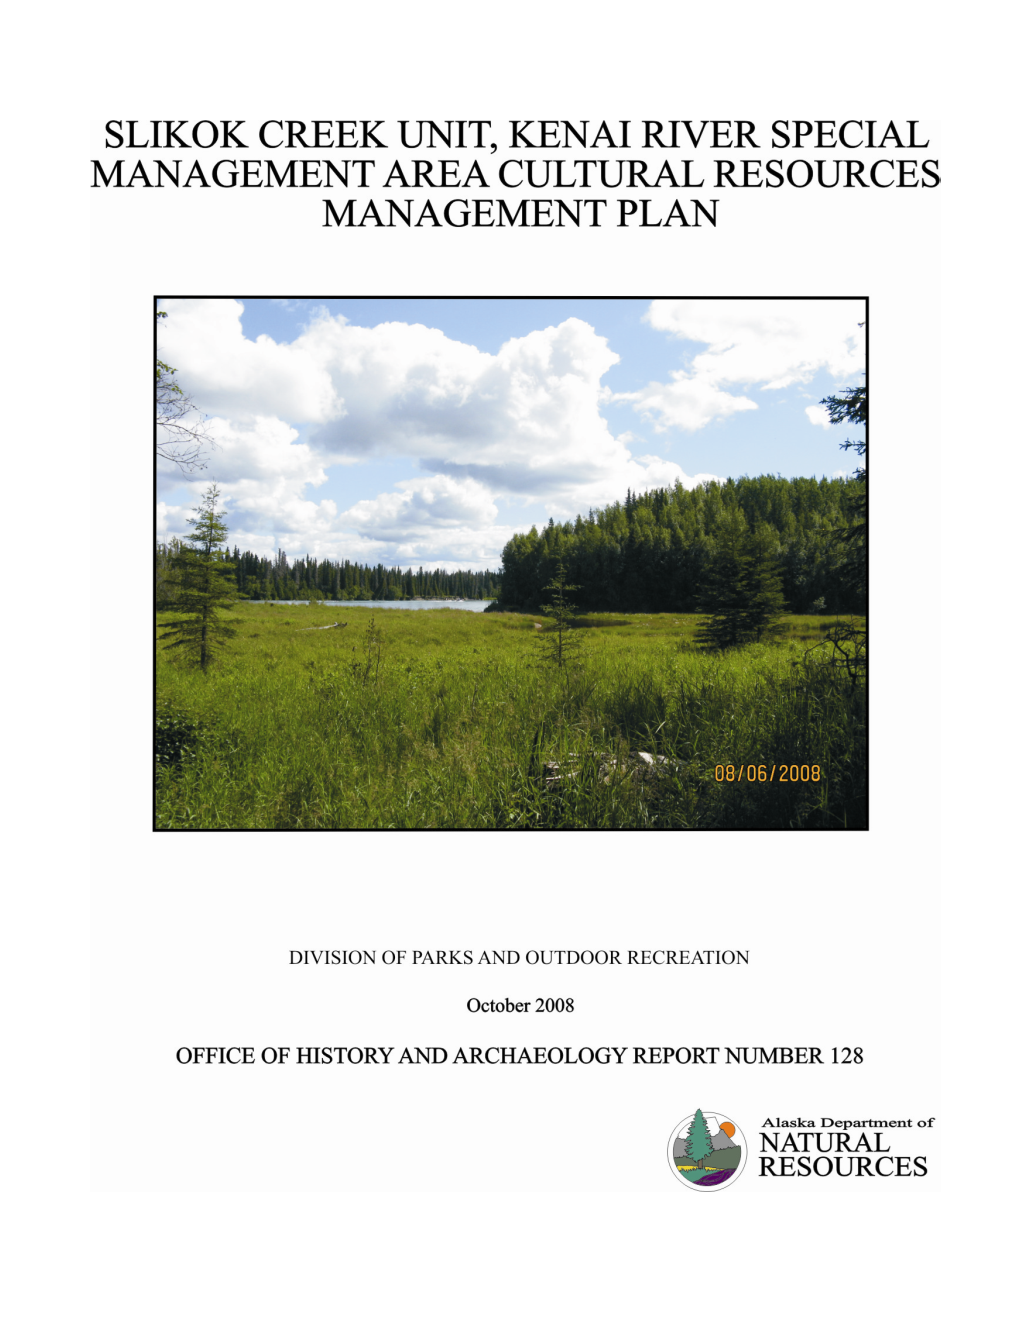 Slilkok Creek KRSMA Cultural Resources Management Plan